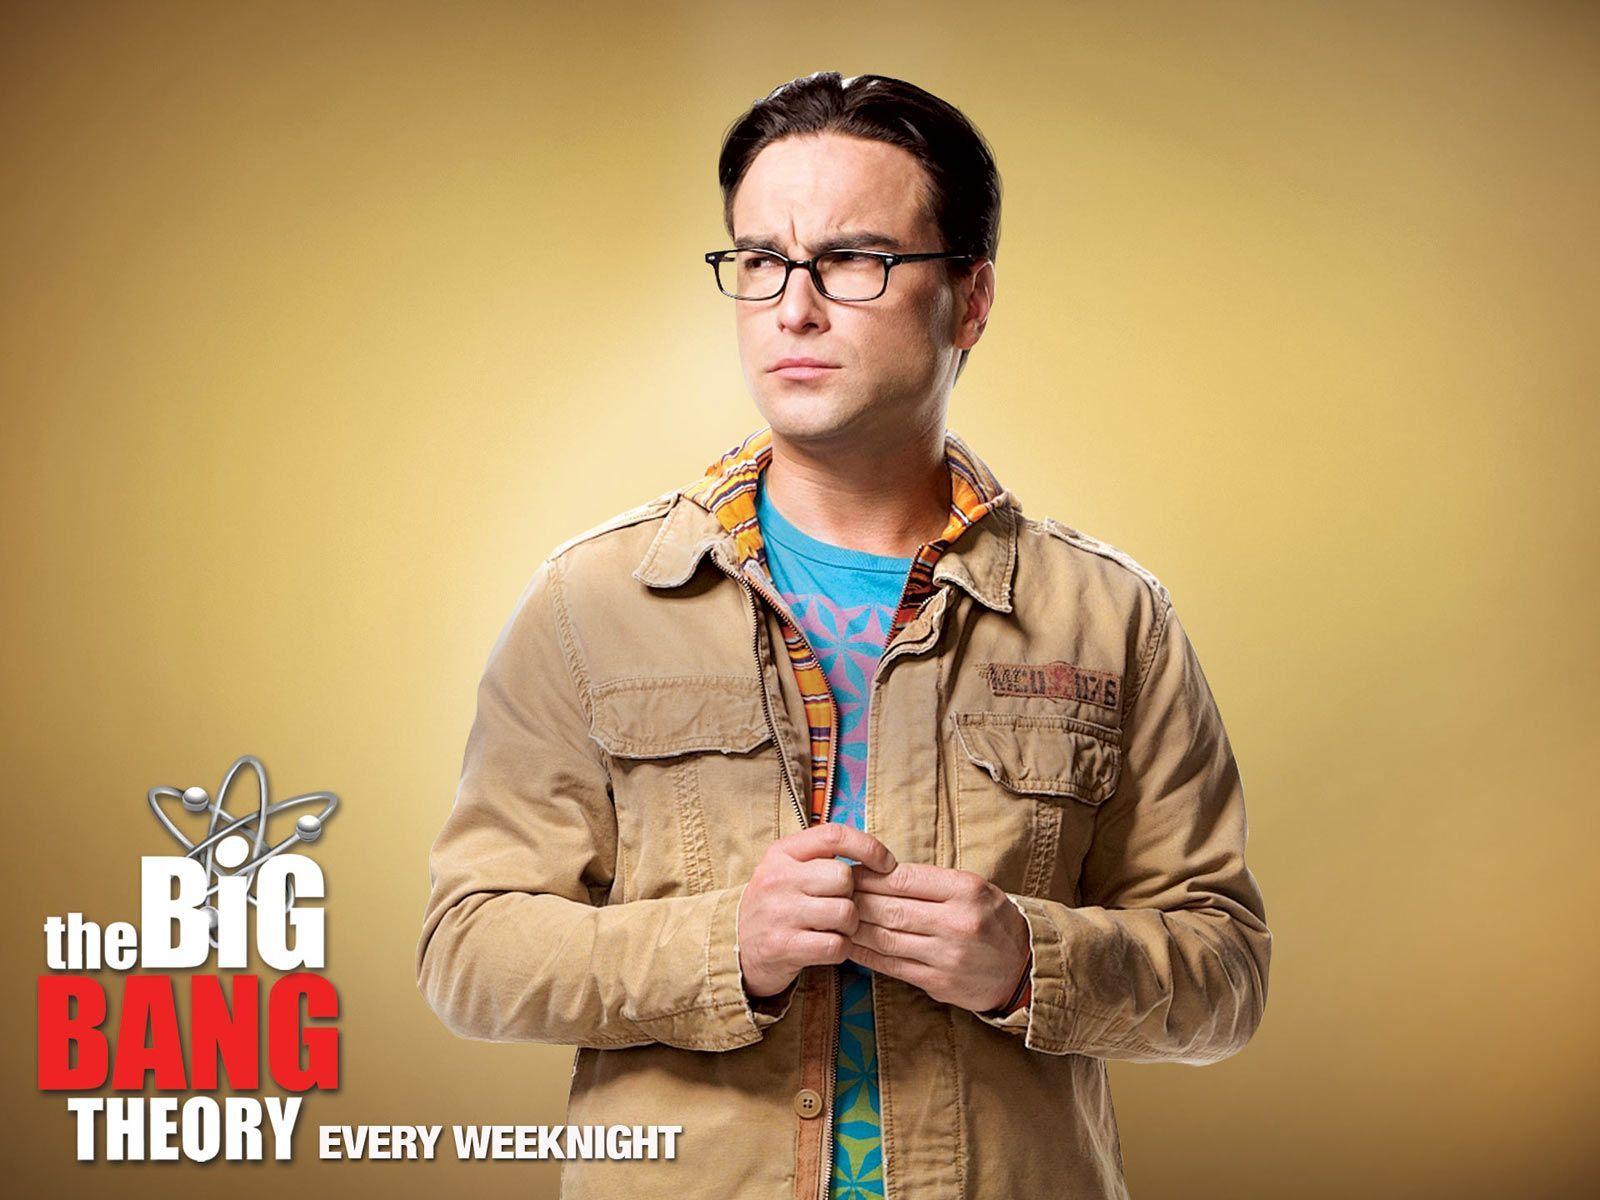 The Big Bang Theory” Season 9 Episode 20 Spoilers: Sheldon To